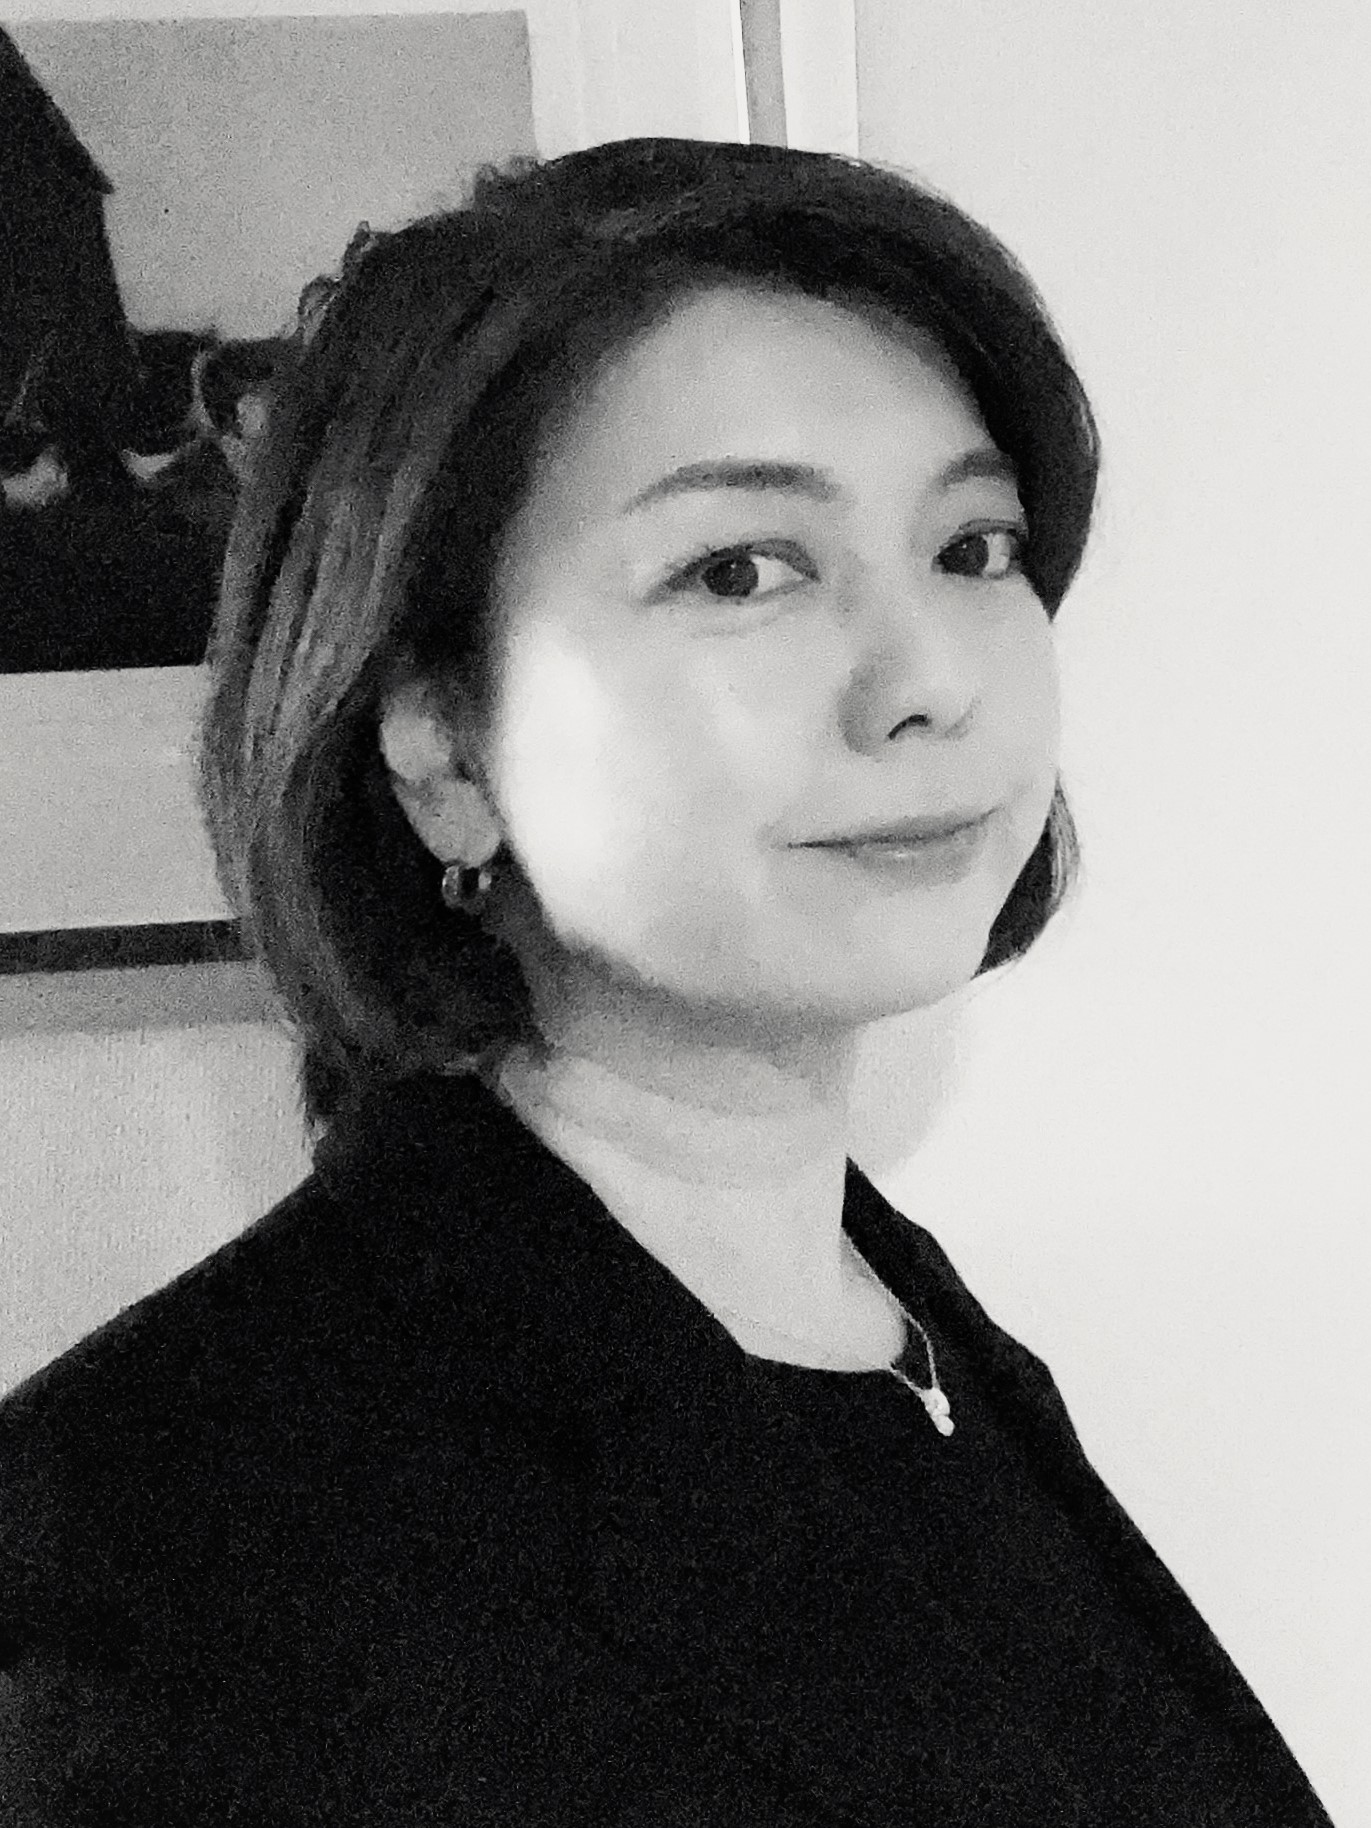 Ayako Nagata